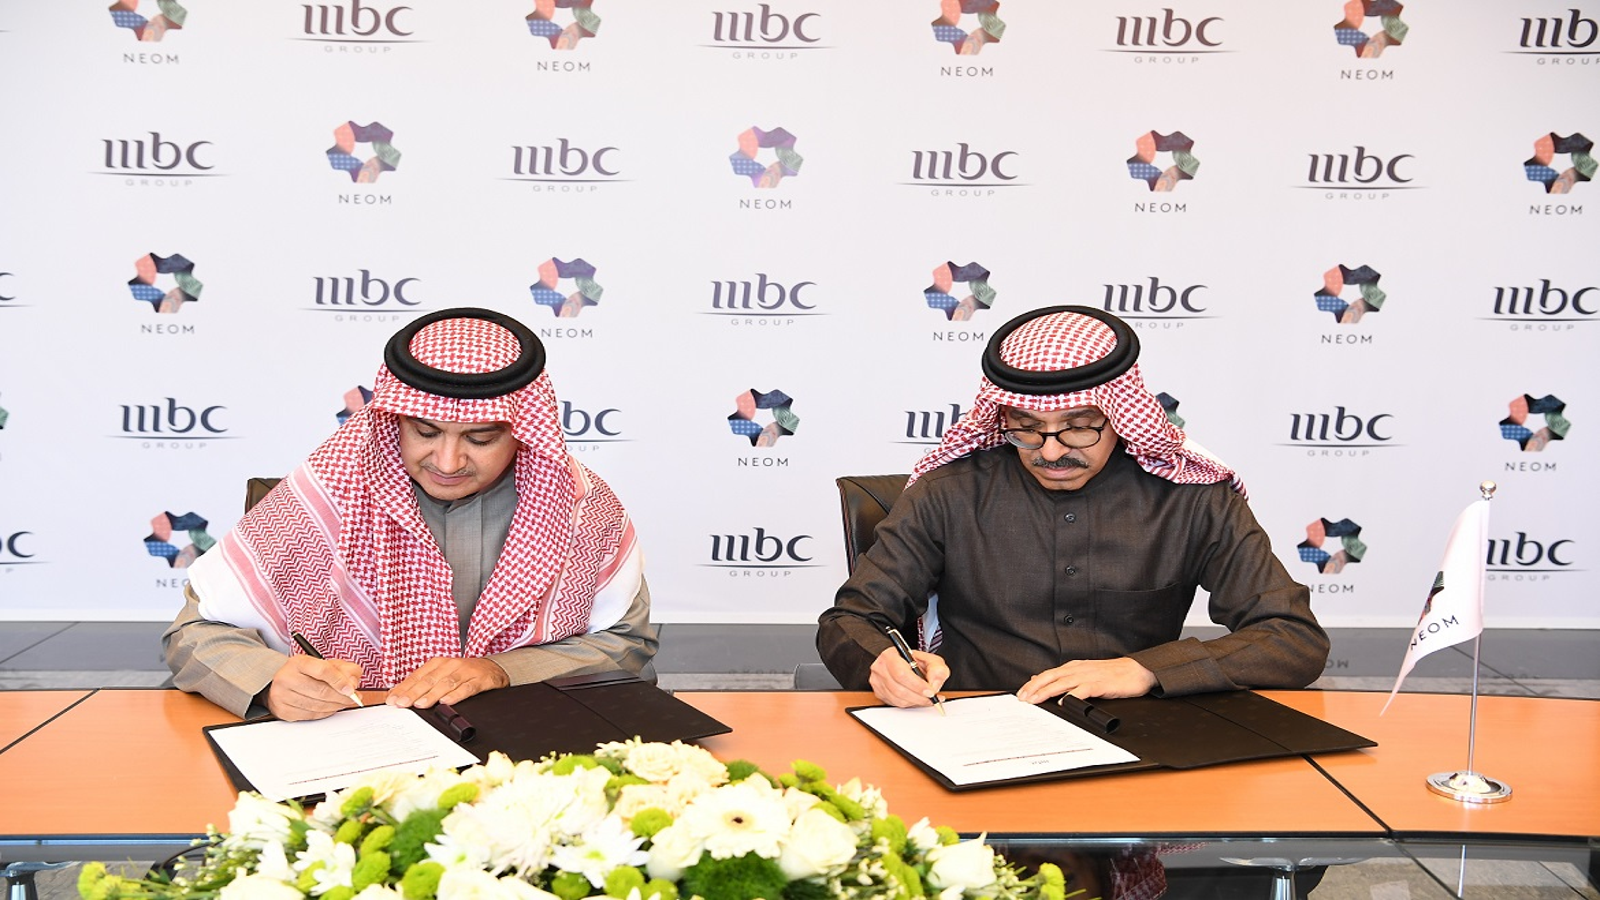 Saudi Arabia's Neom to build AAA studio with MBC Group 